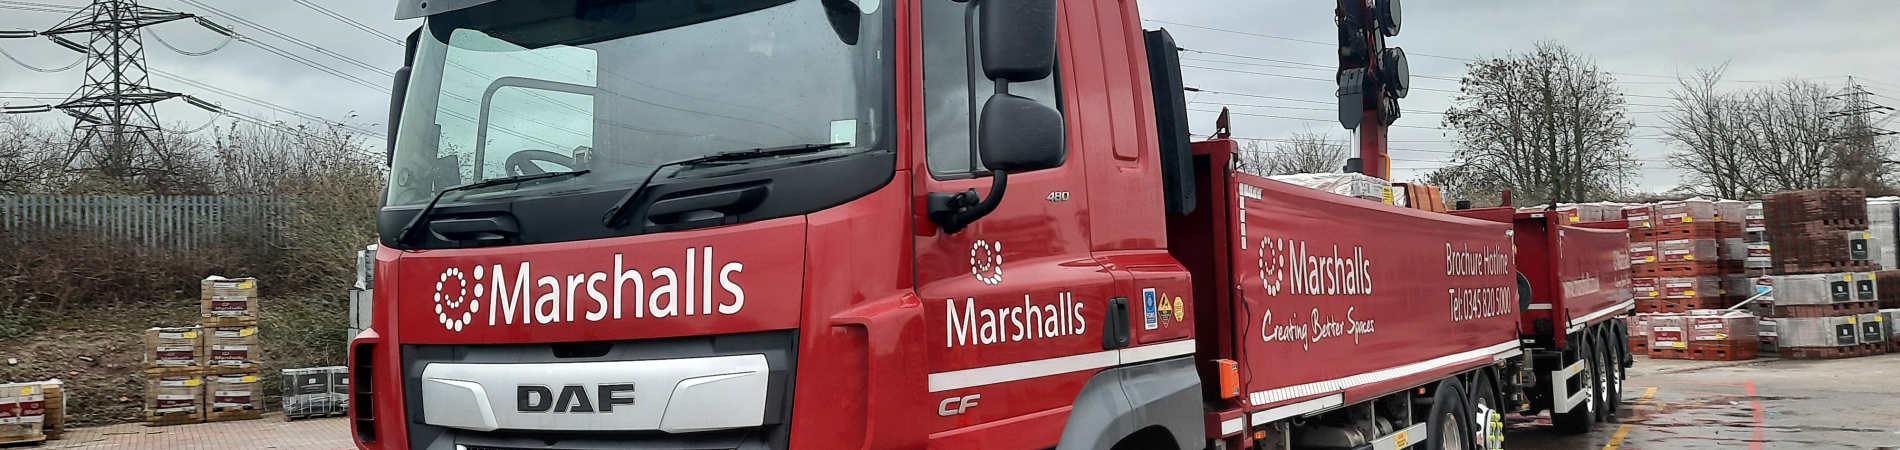 Marshalls announces new logistics partnership 